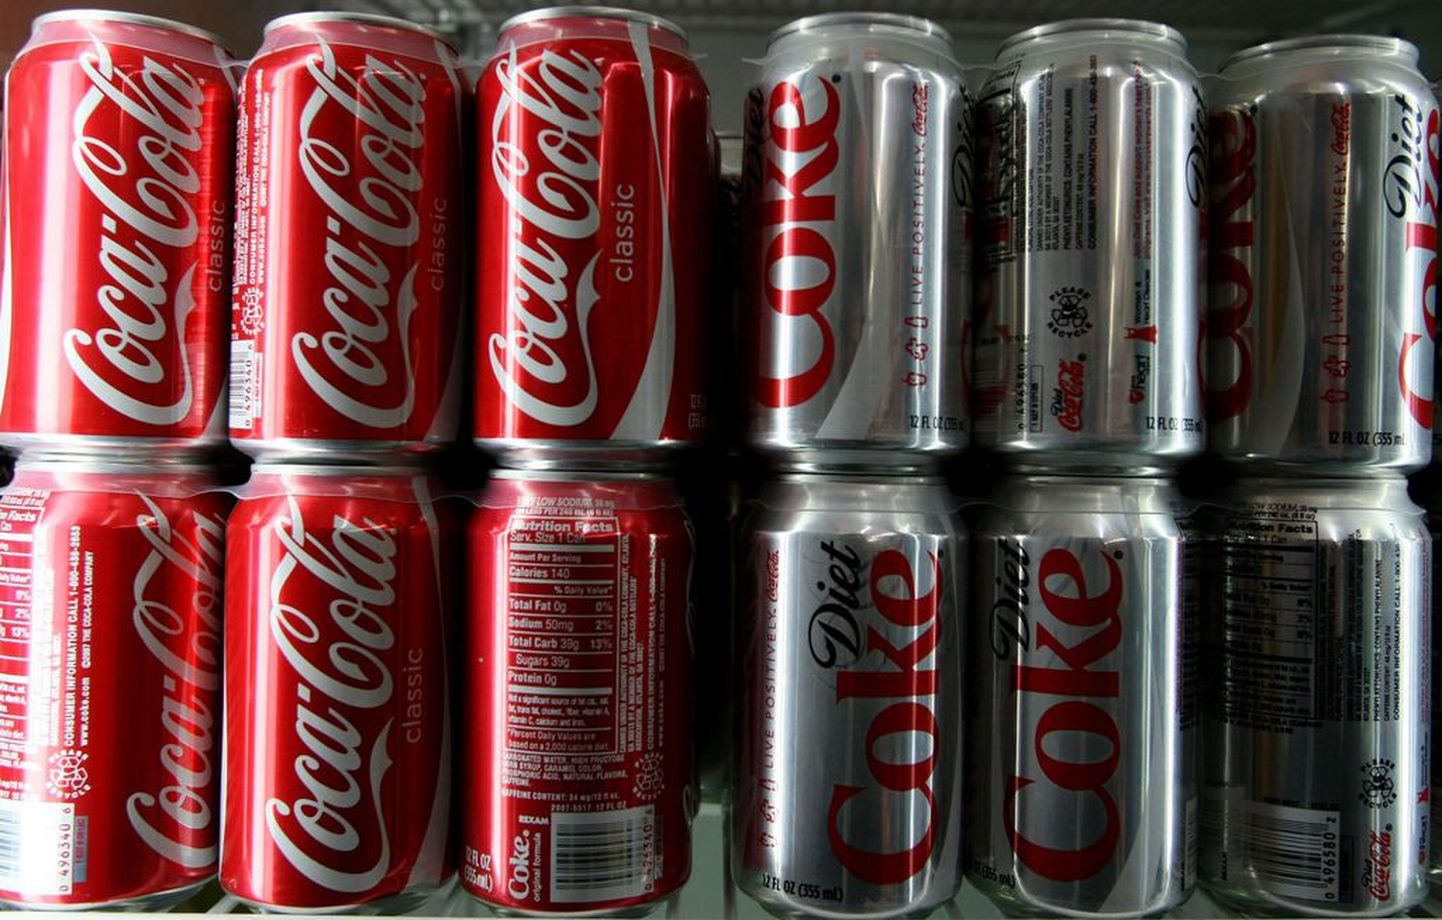 Näide Coca-Cola toodangust